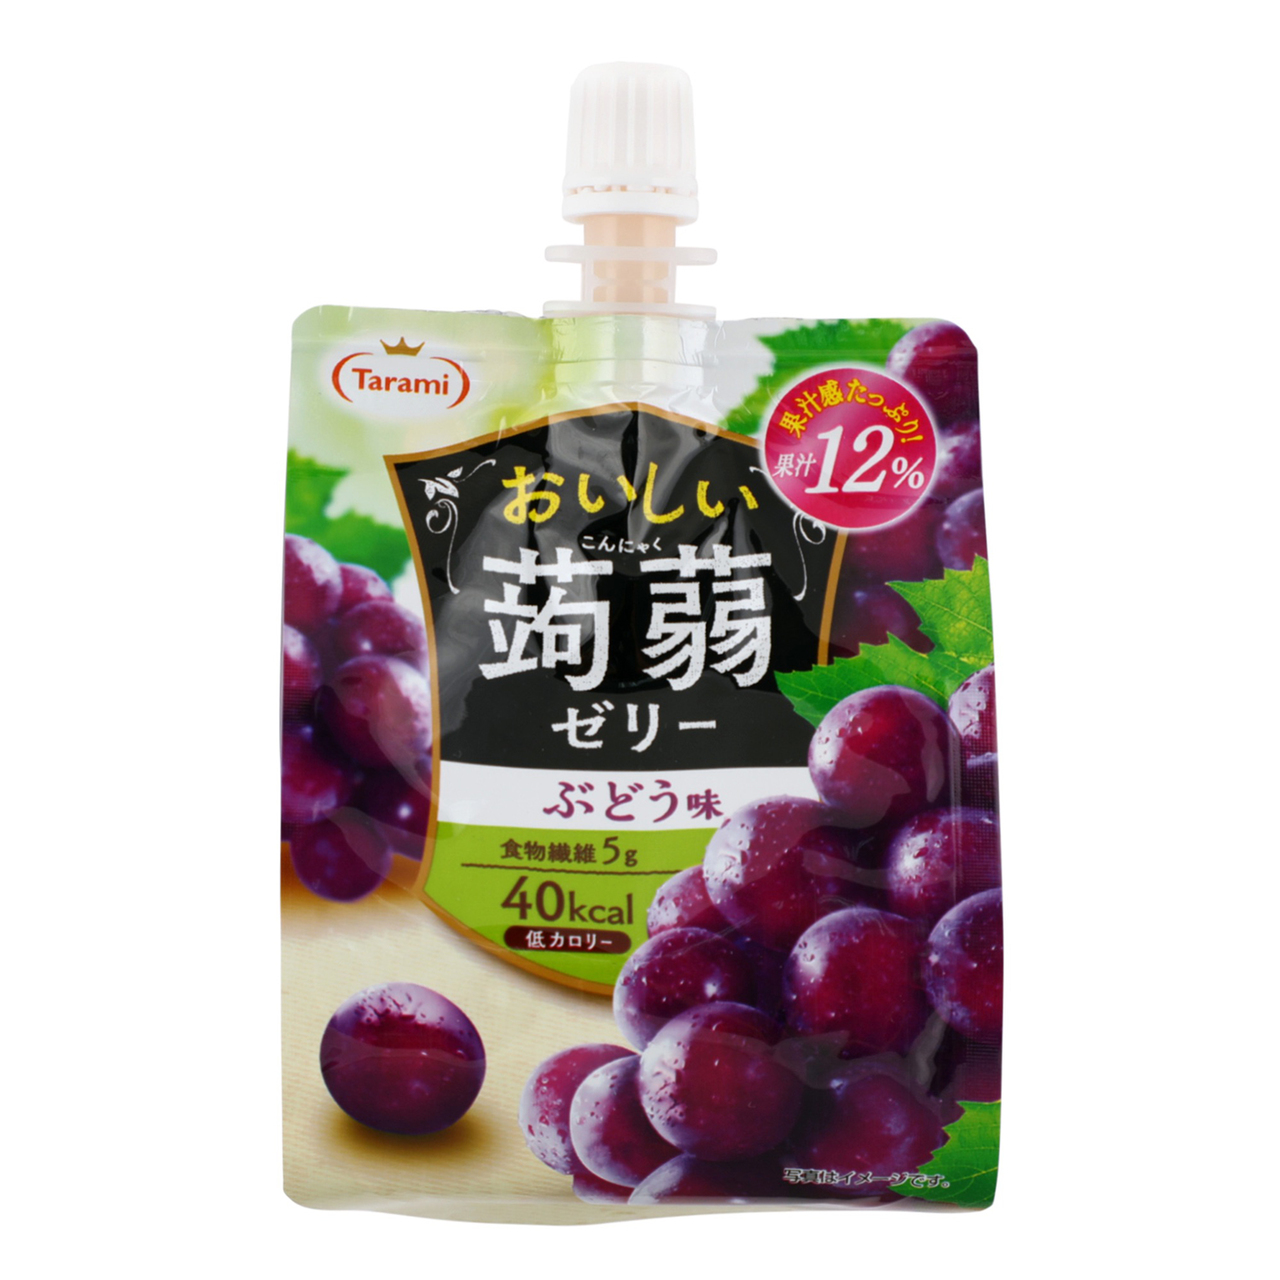 Tarami Oishii Konnyaku Jelly Grape Drink Buyjapan